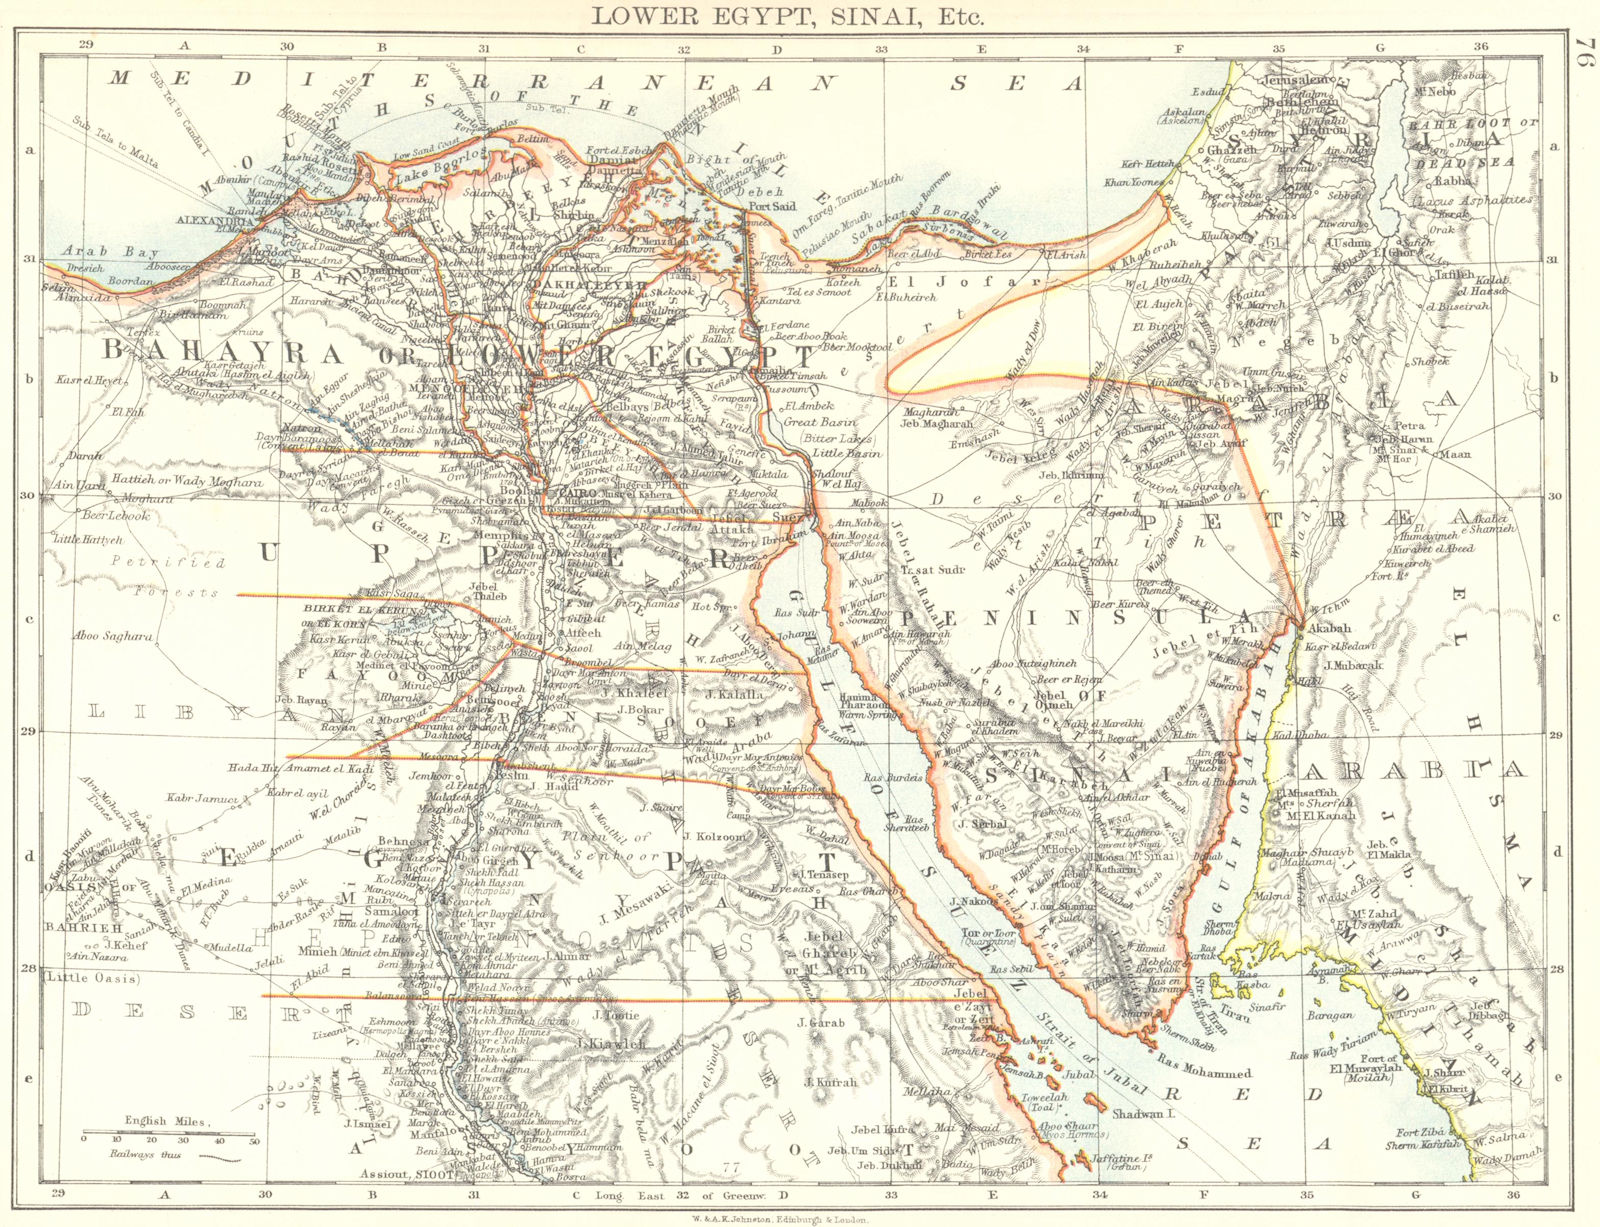 LOWER EGYPT & SINAI. Provinces. Nile valley/delta. Railways. JOHNSTON 1899 map